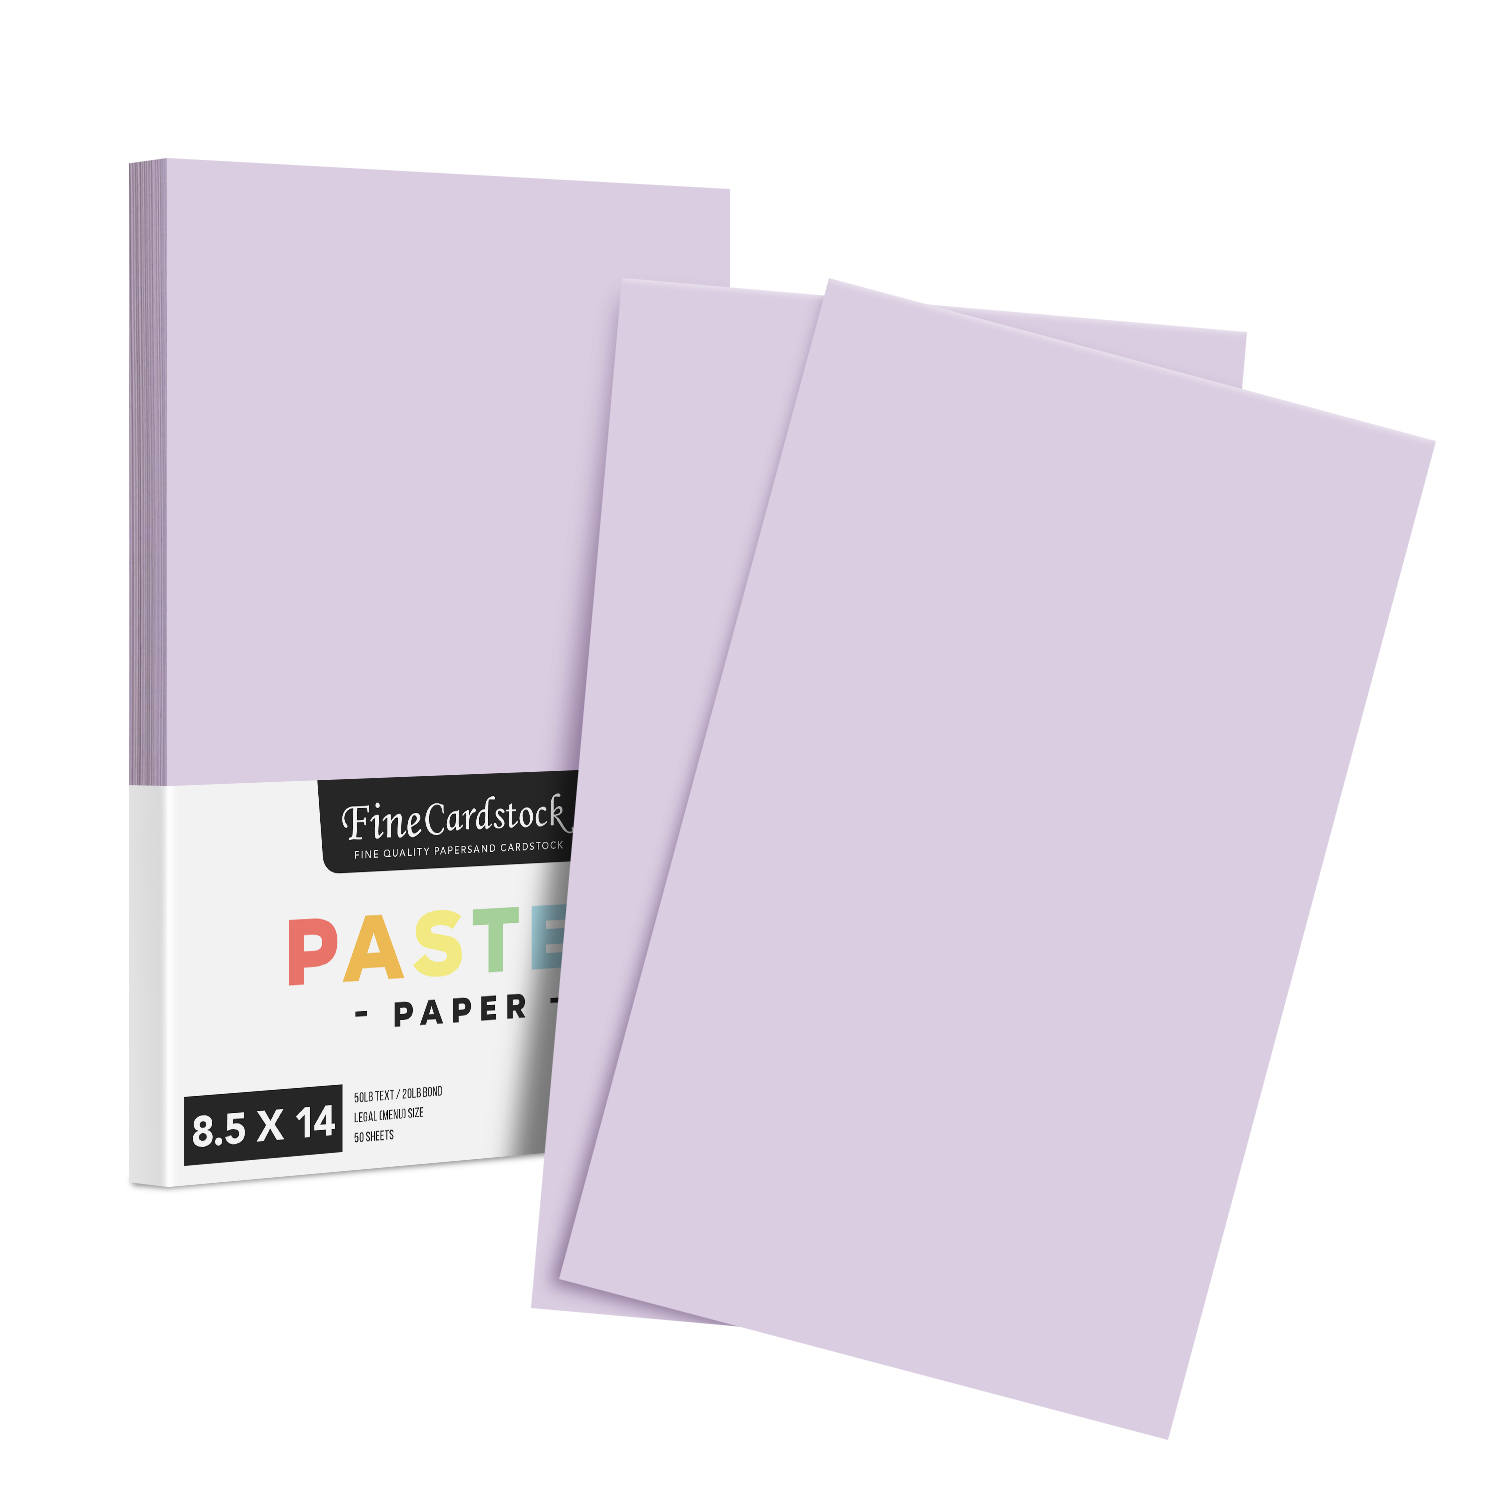 Search for purple paper